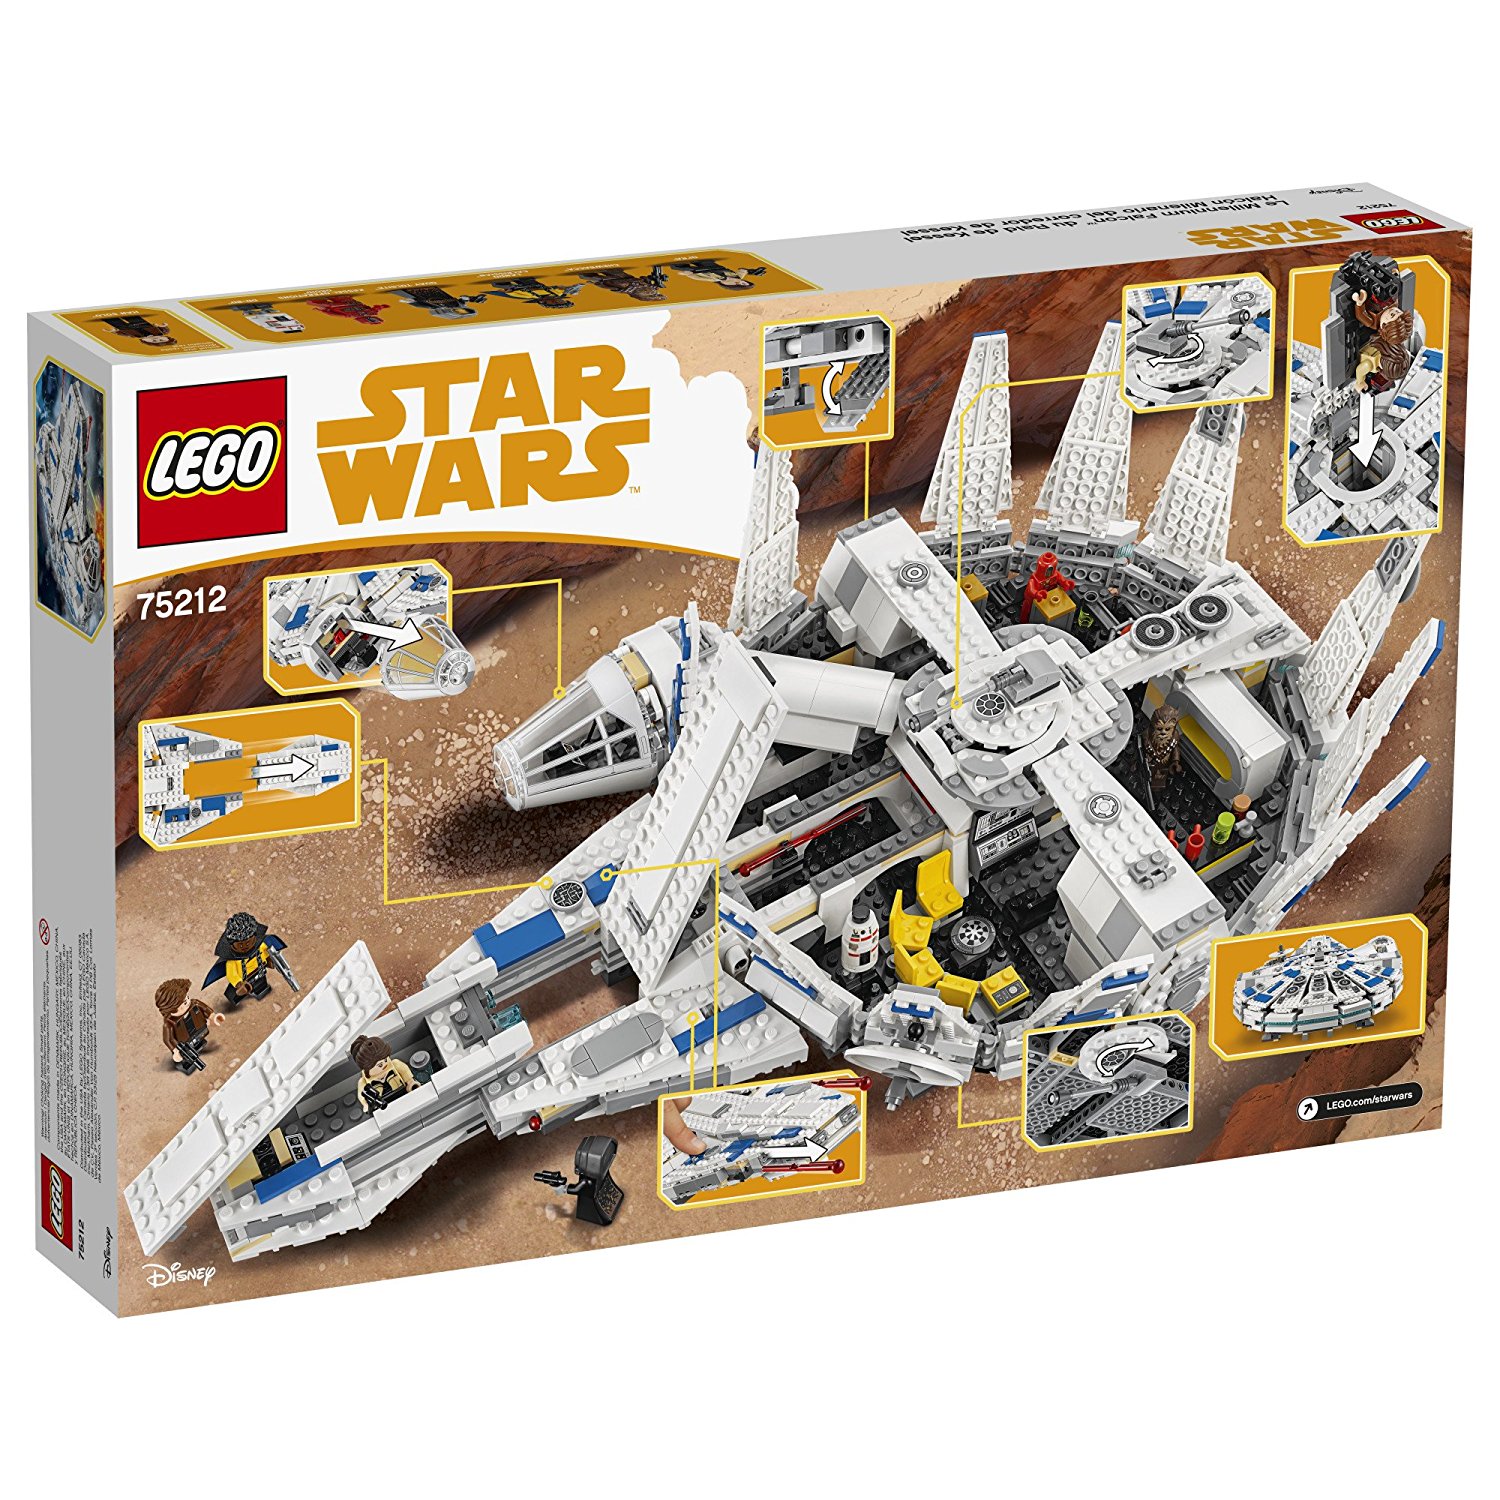 Solo: ASWS Kessel Run Millennium Falcon Lego Set 2